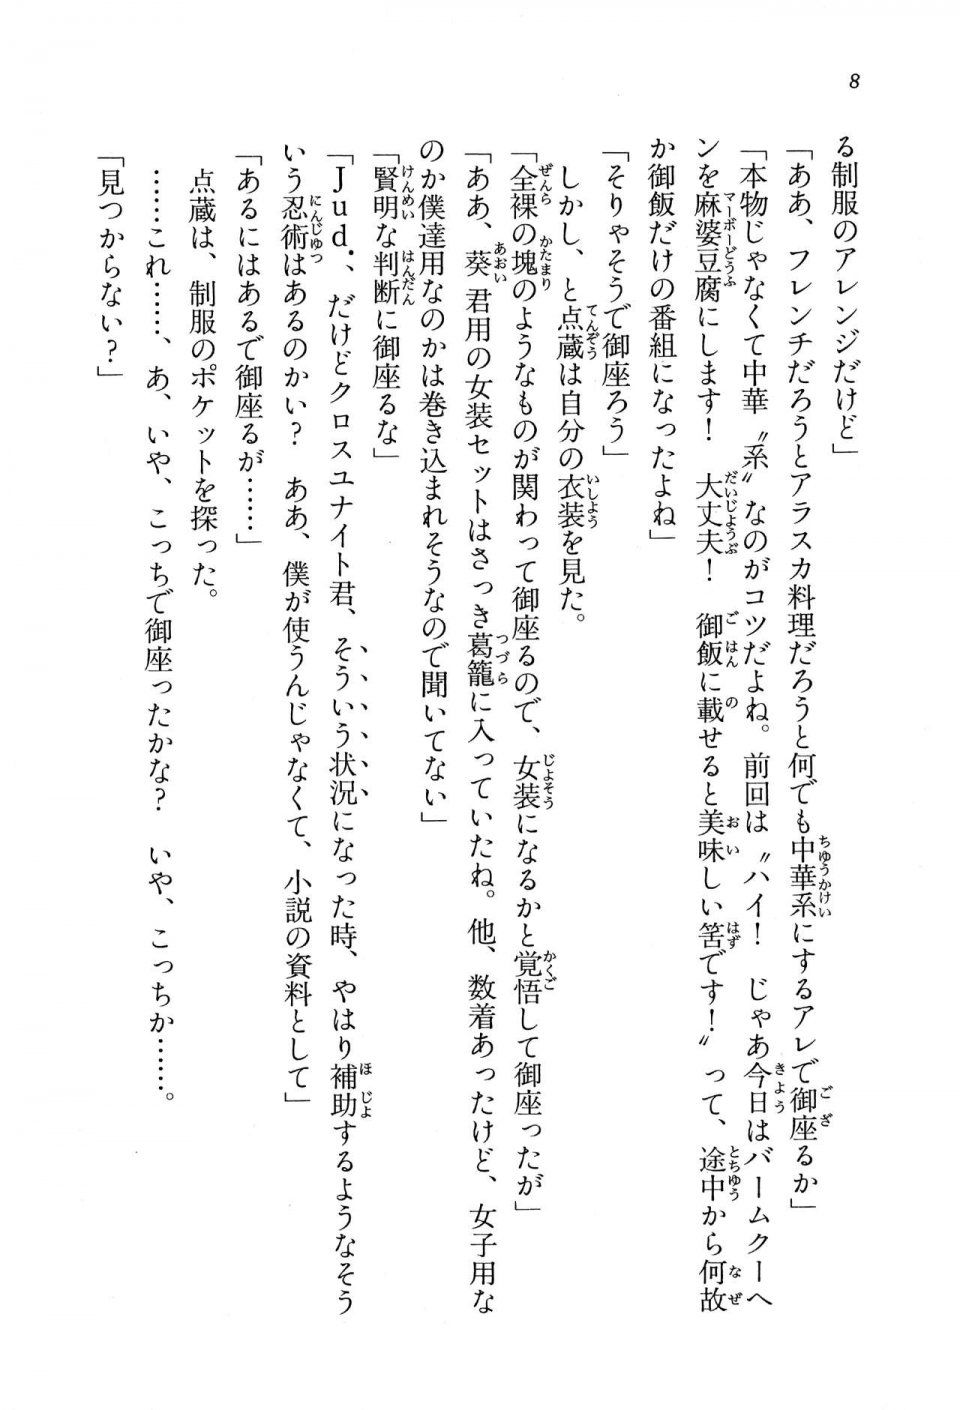 Kyoukai Senjou no Horizon BD Special Mininovel Vol 8(4B) - Photo #12